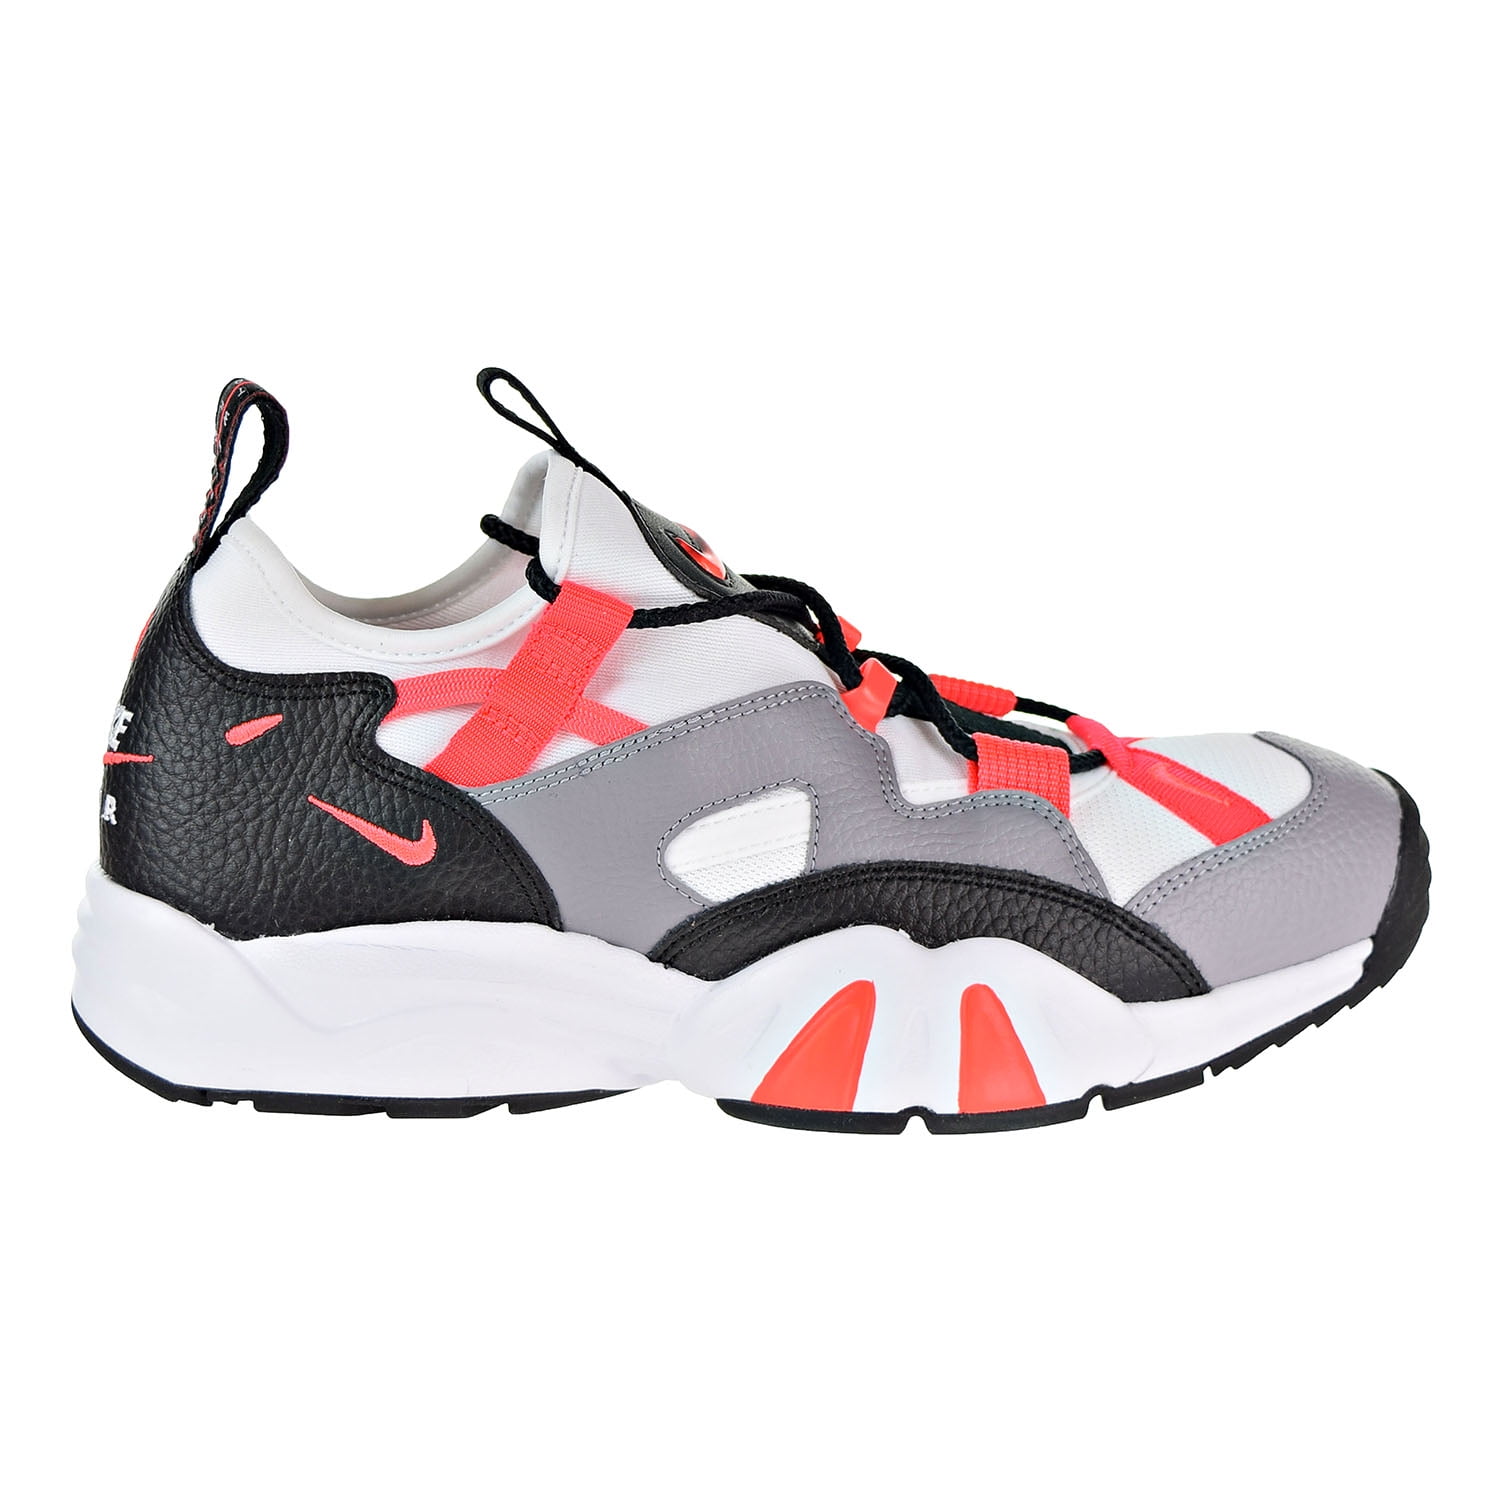 Air Scream LWP Men's Shoes Cement Grey/Infrared/Black -